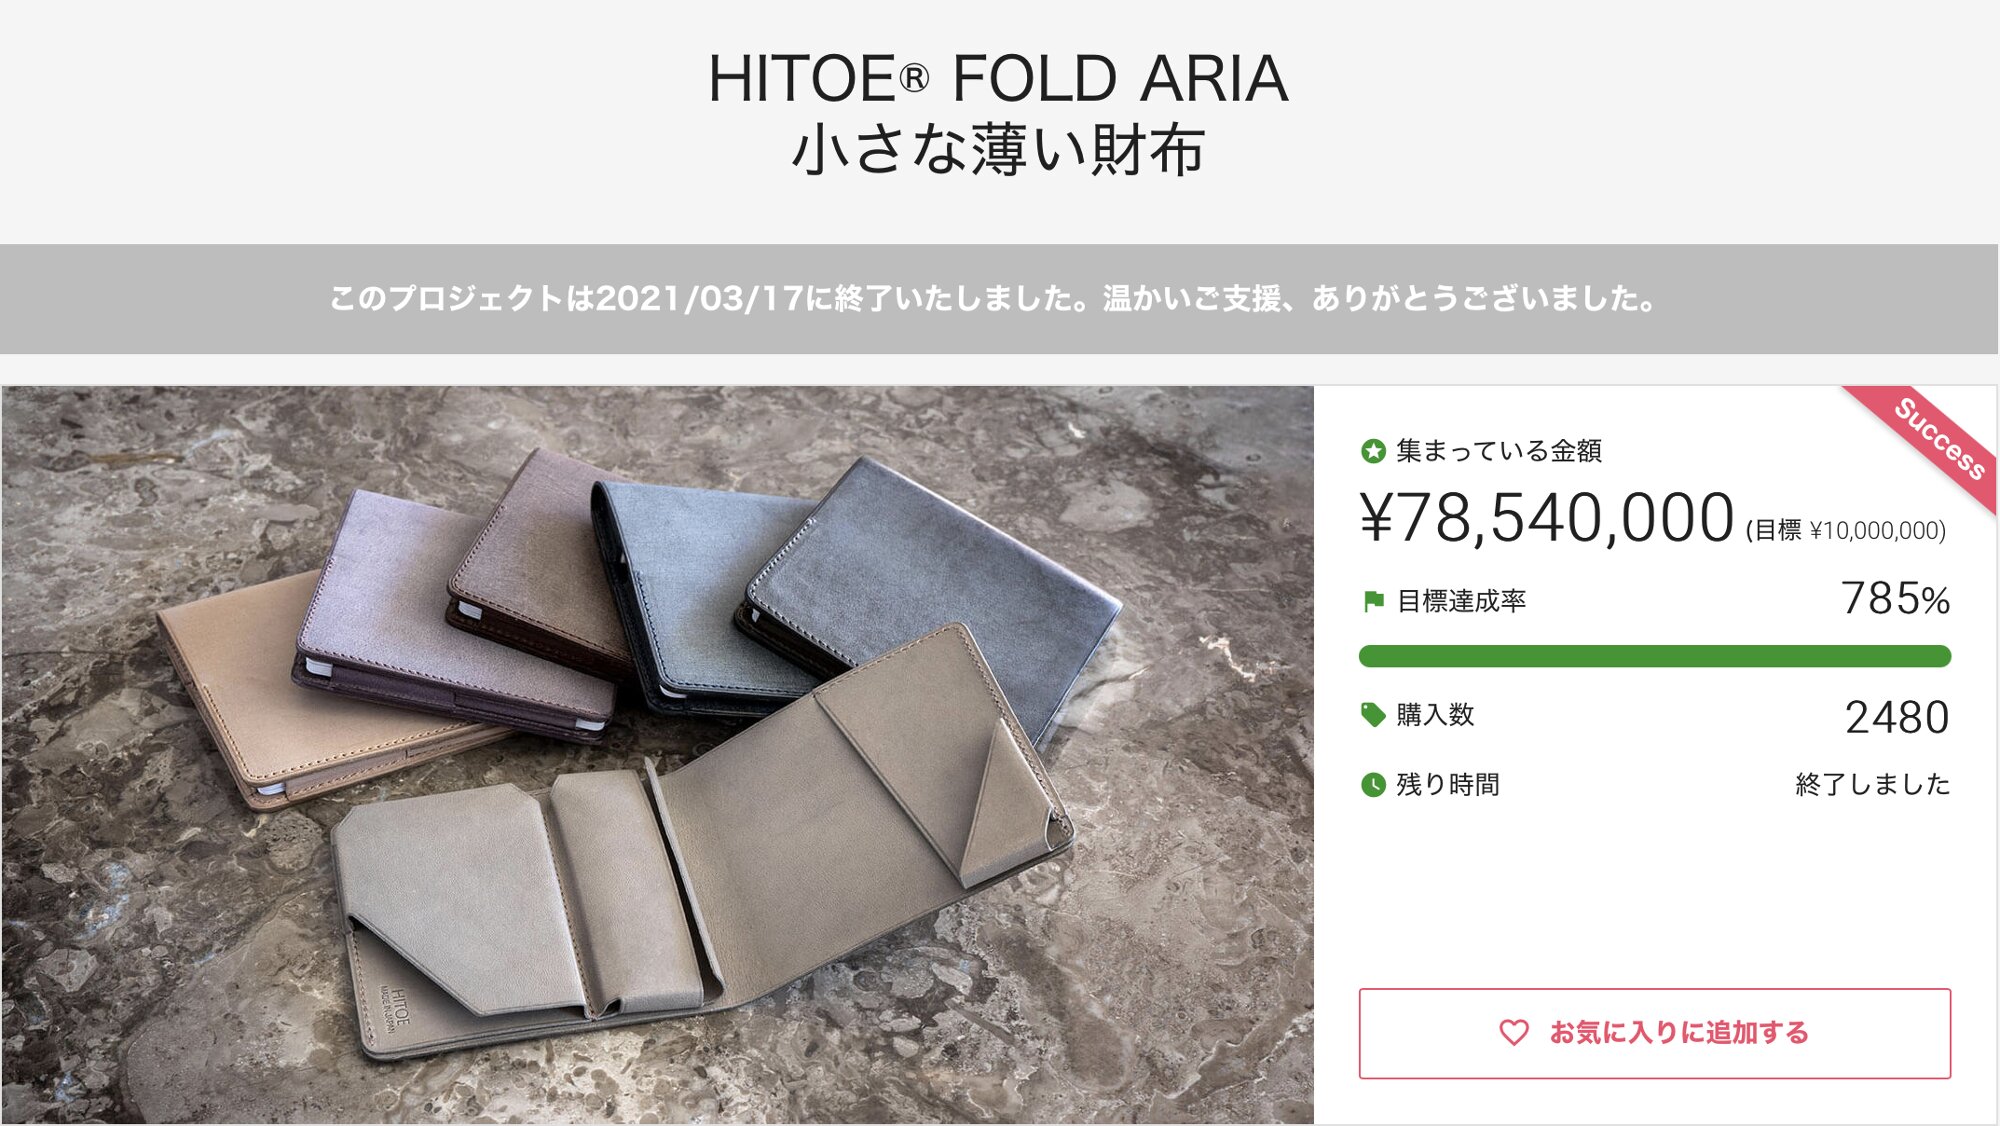 HITOE Fold Aria-Foschia-